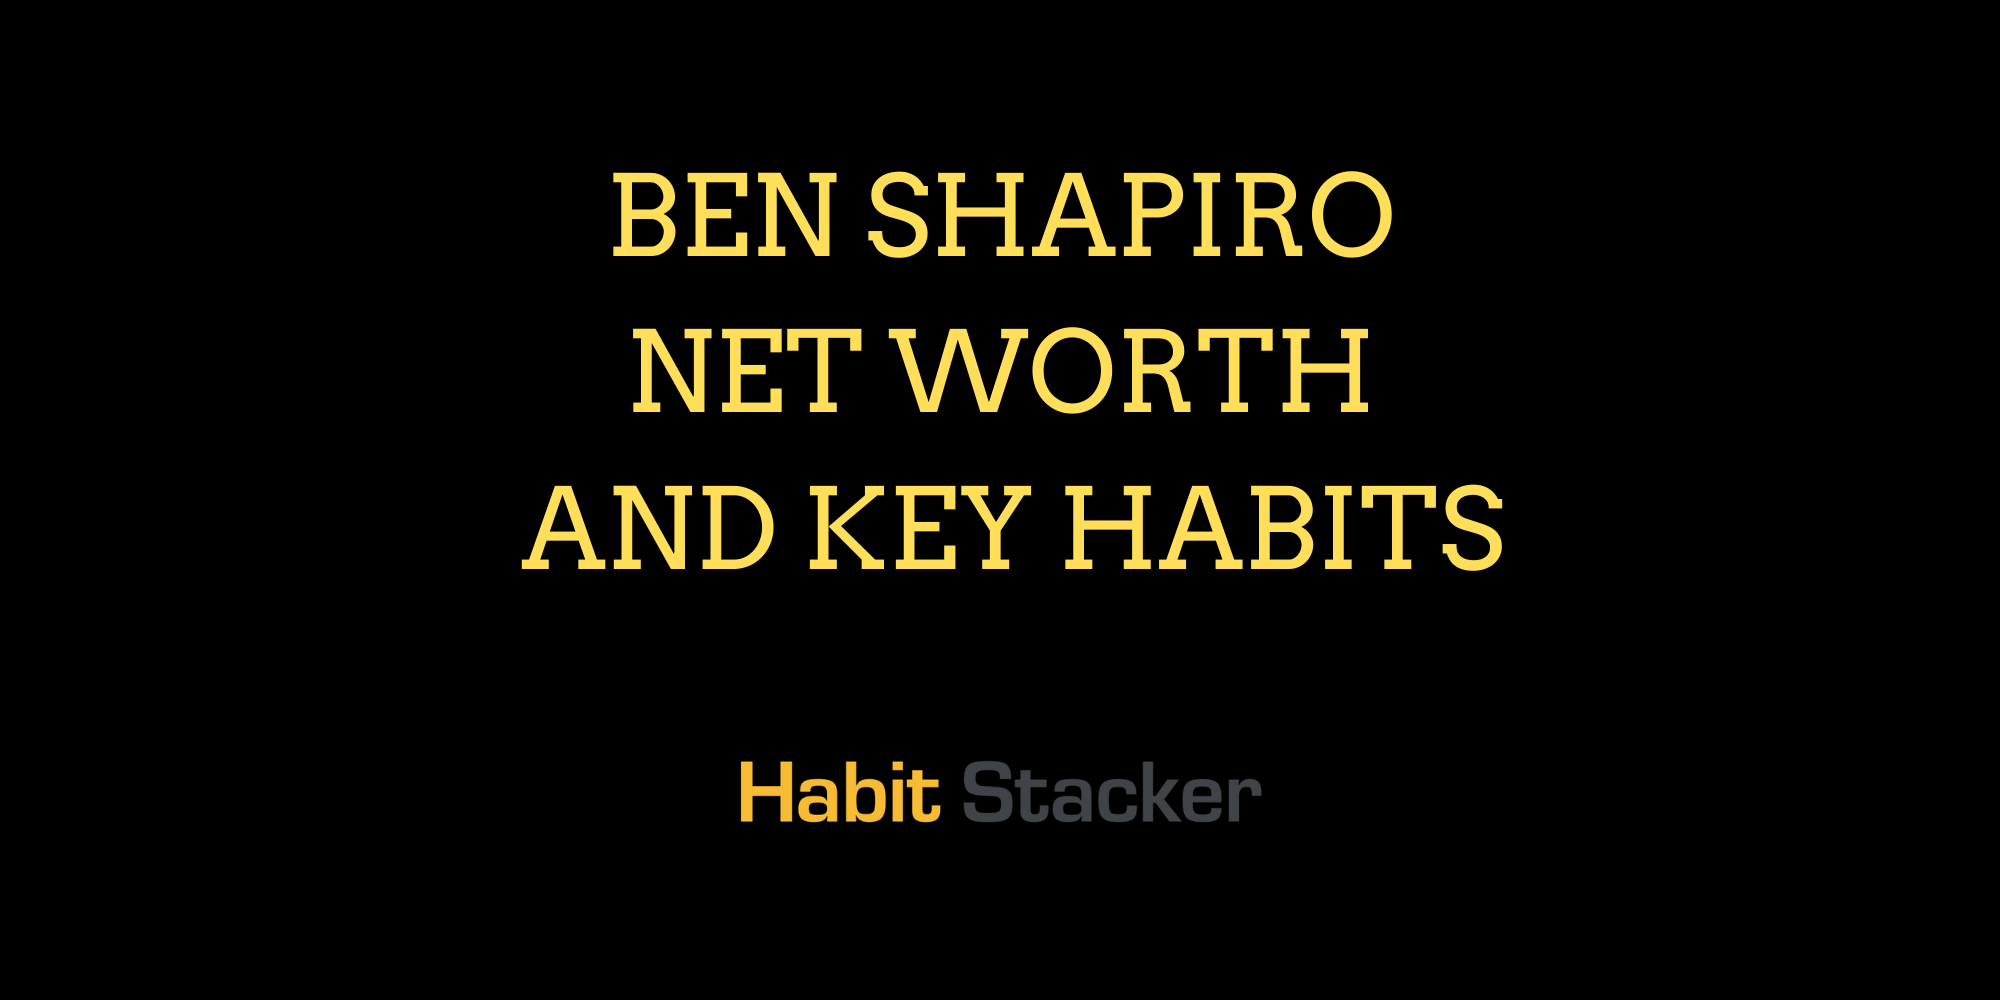 Ben Shapiro Net Worth and Key Habits